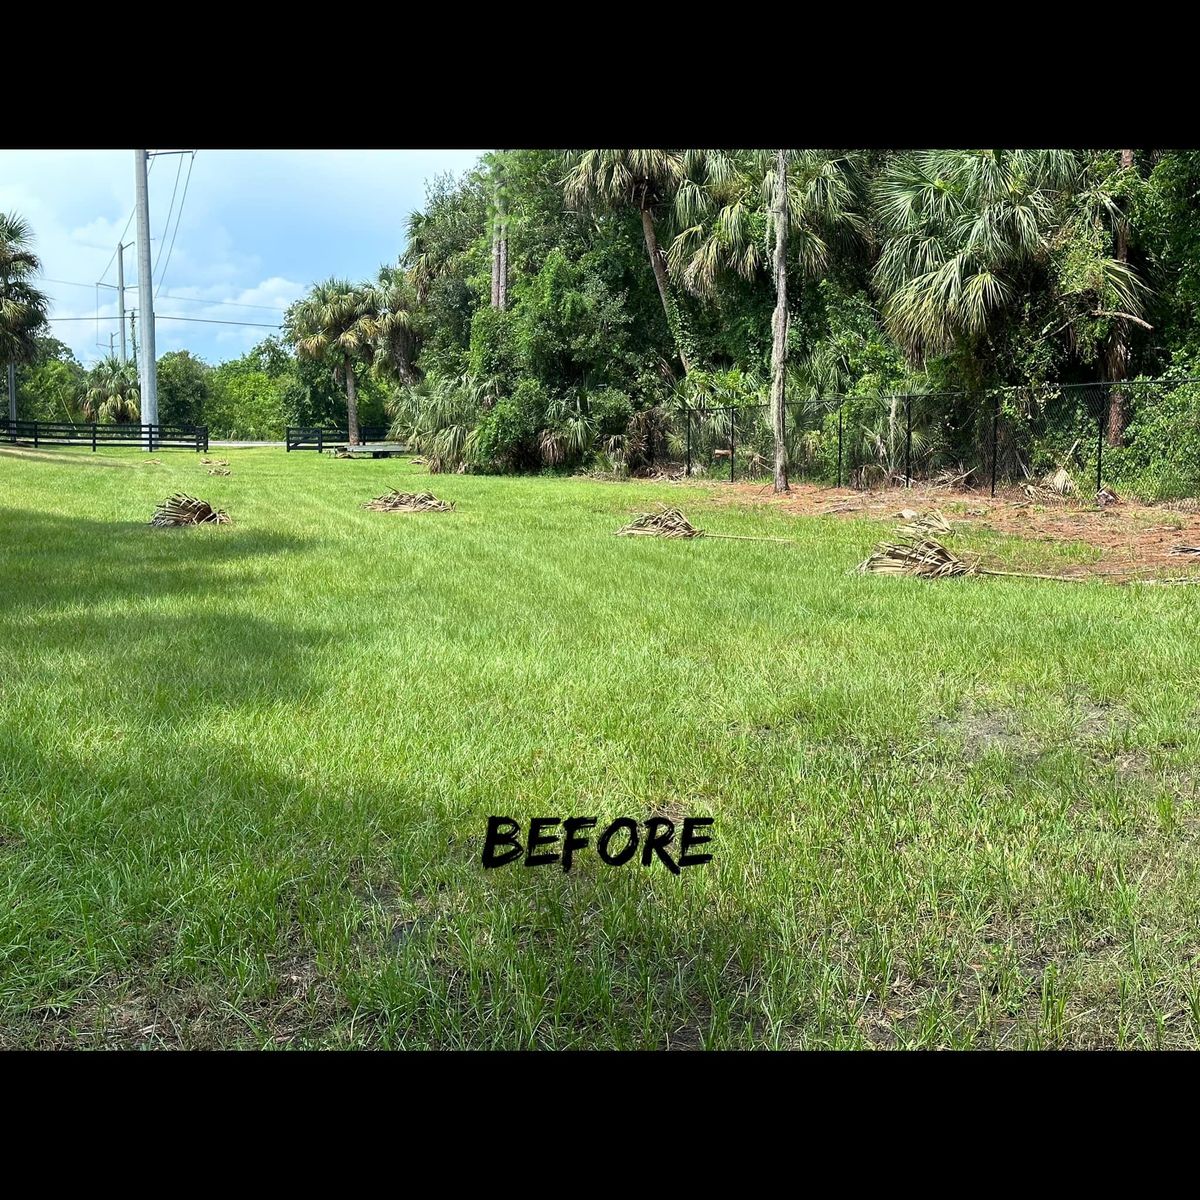 Debris Removal for Junk Heroes in Orlando, FL